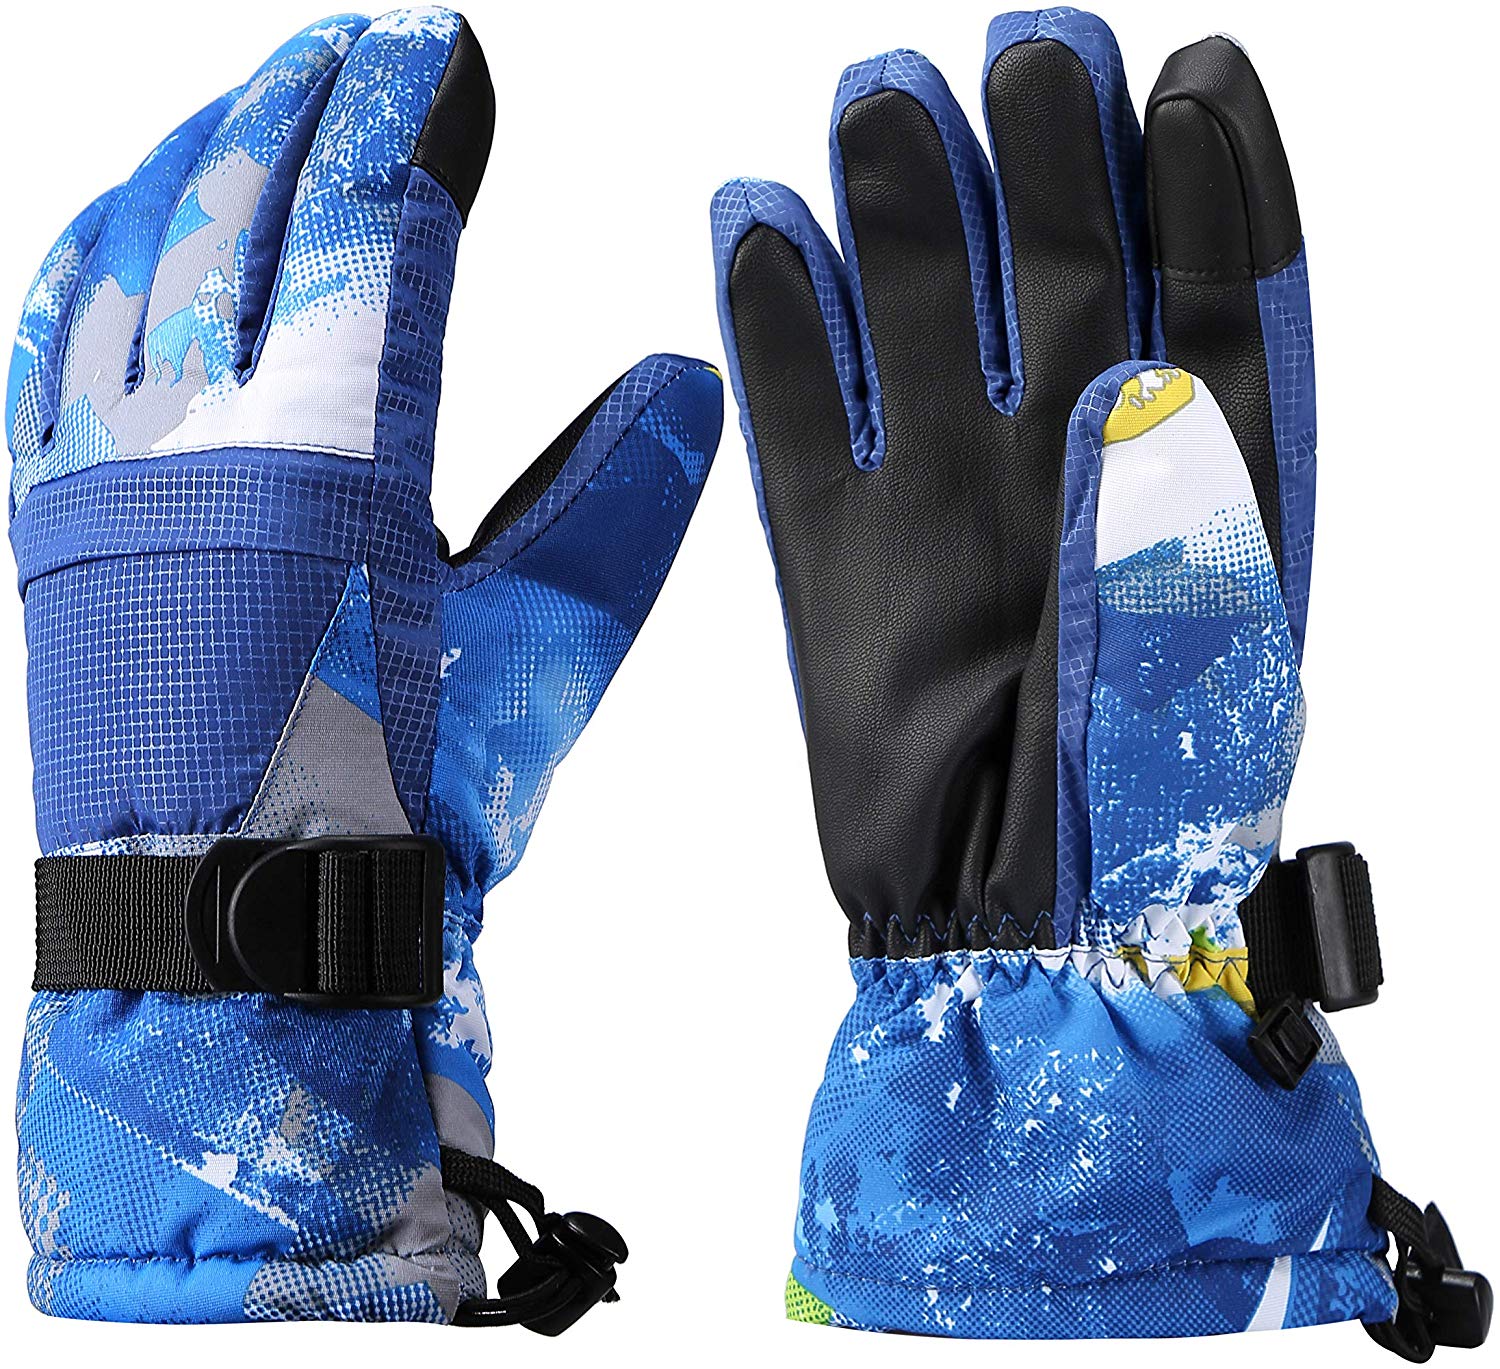 Aisprts Warmest Waterproof & Breathable Snow Ski Gloves